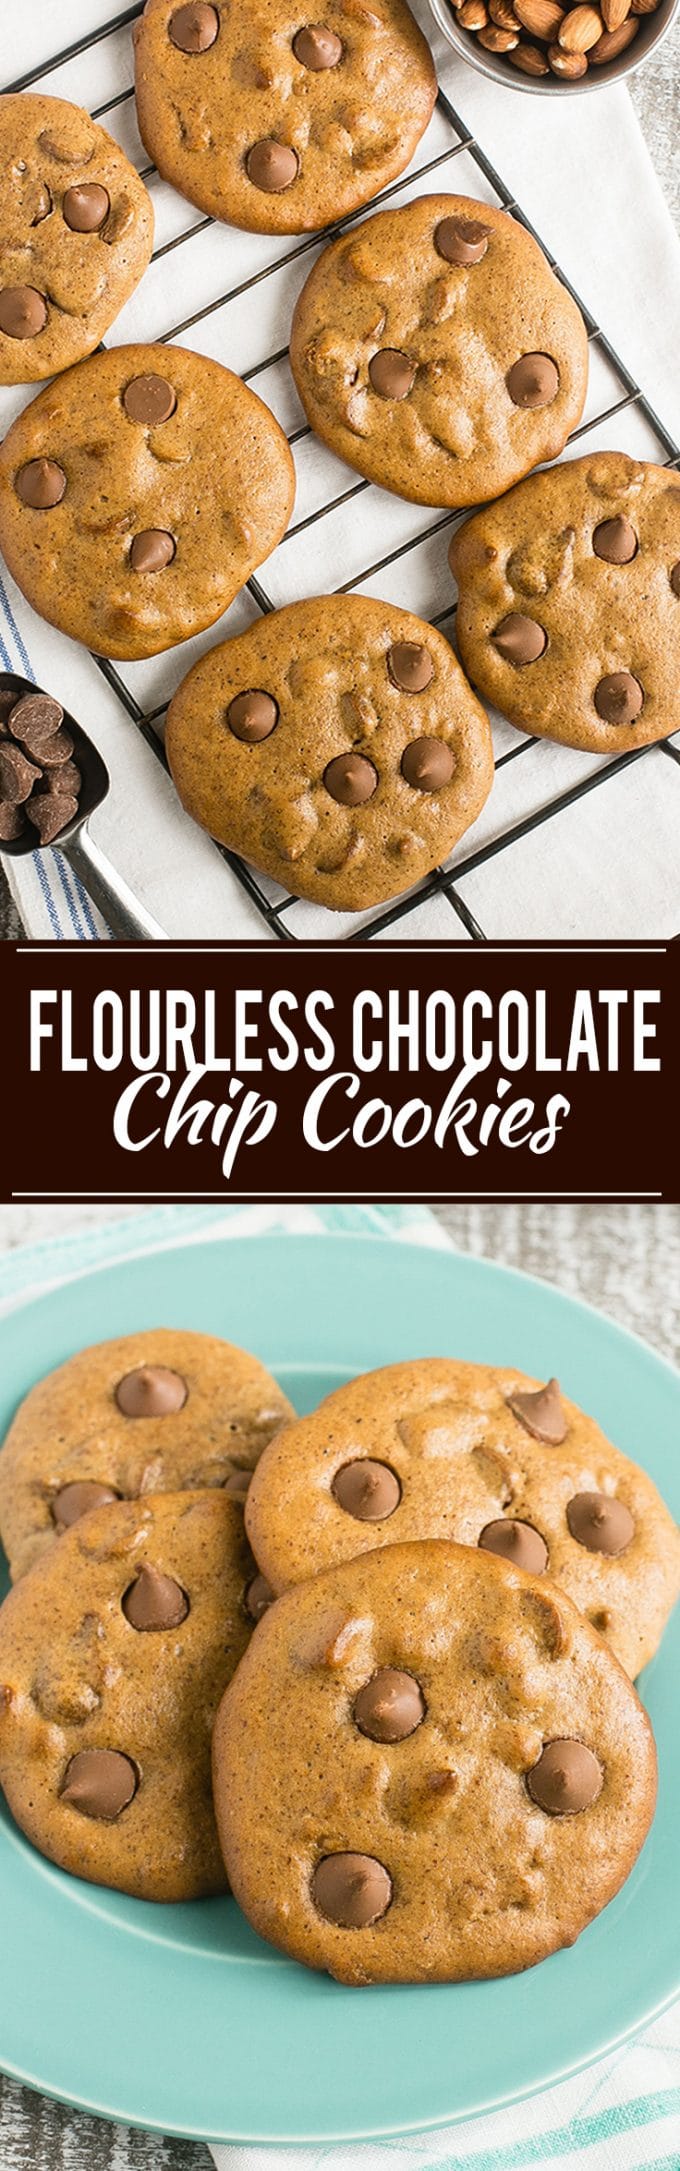 Flourless Chocolate Chip Cookies Recipe | Best Flourless Chocolate Chip Cookies | Gluten Free Chocolate Chip Cookies | Almond Butter Chocolate Chip Cookies